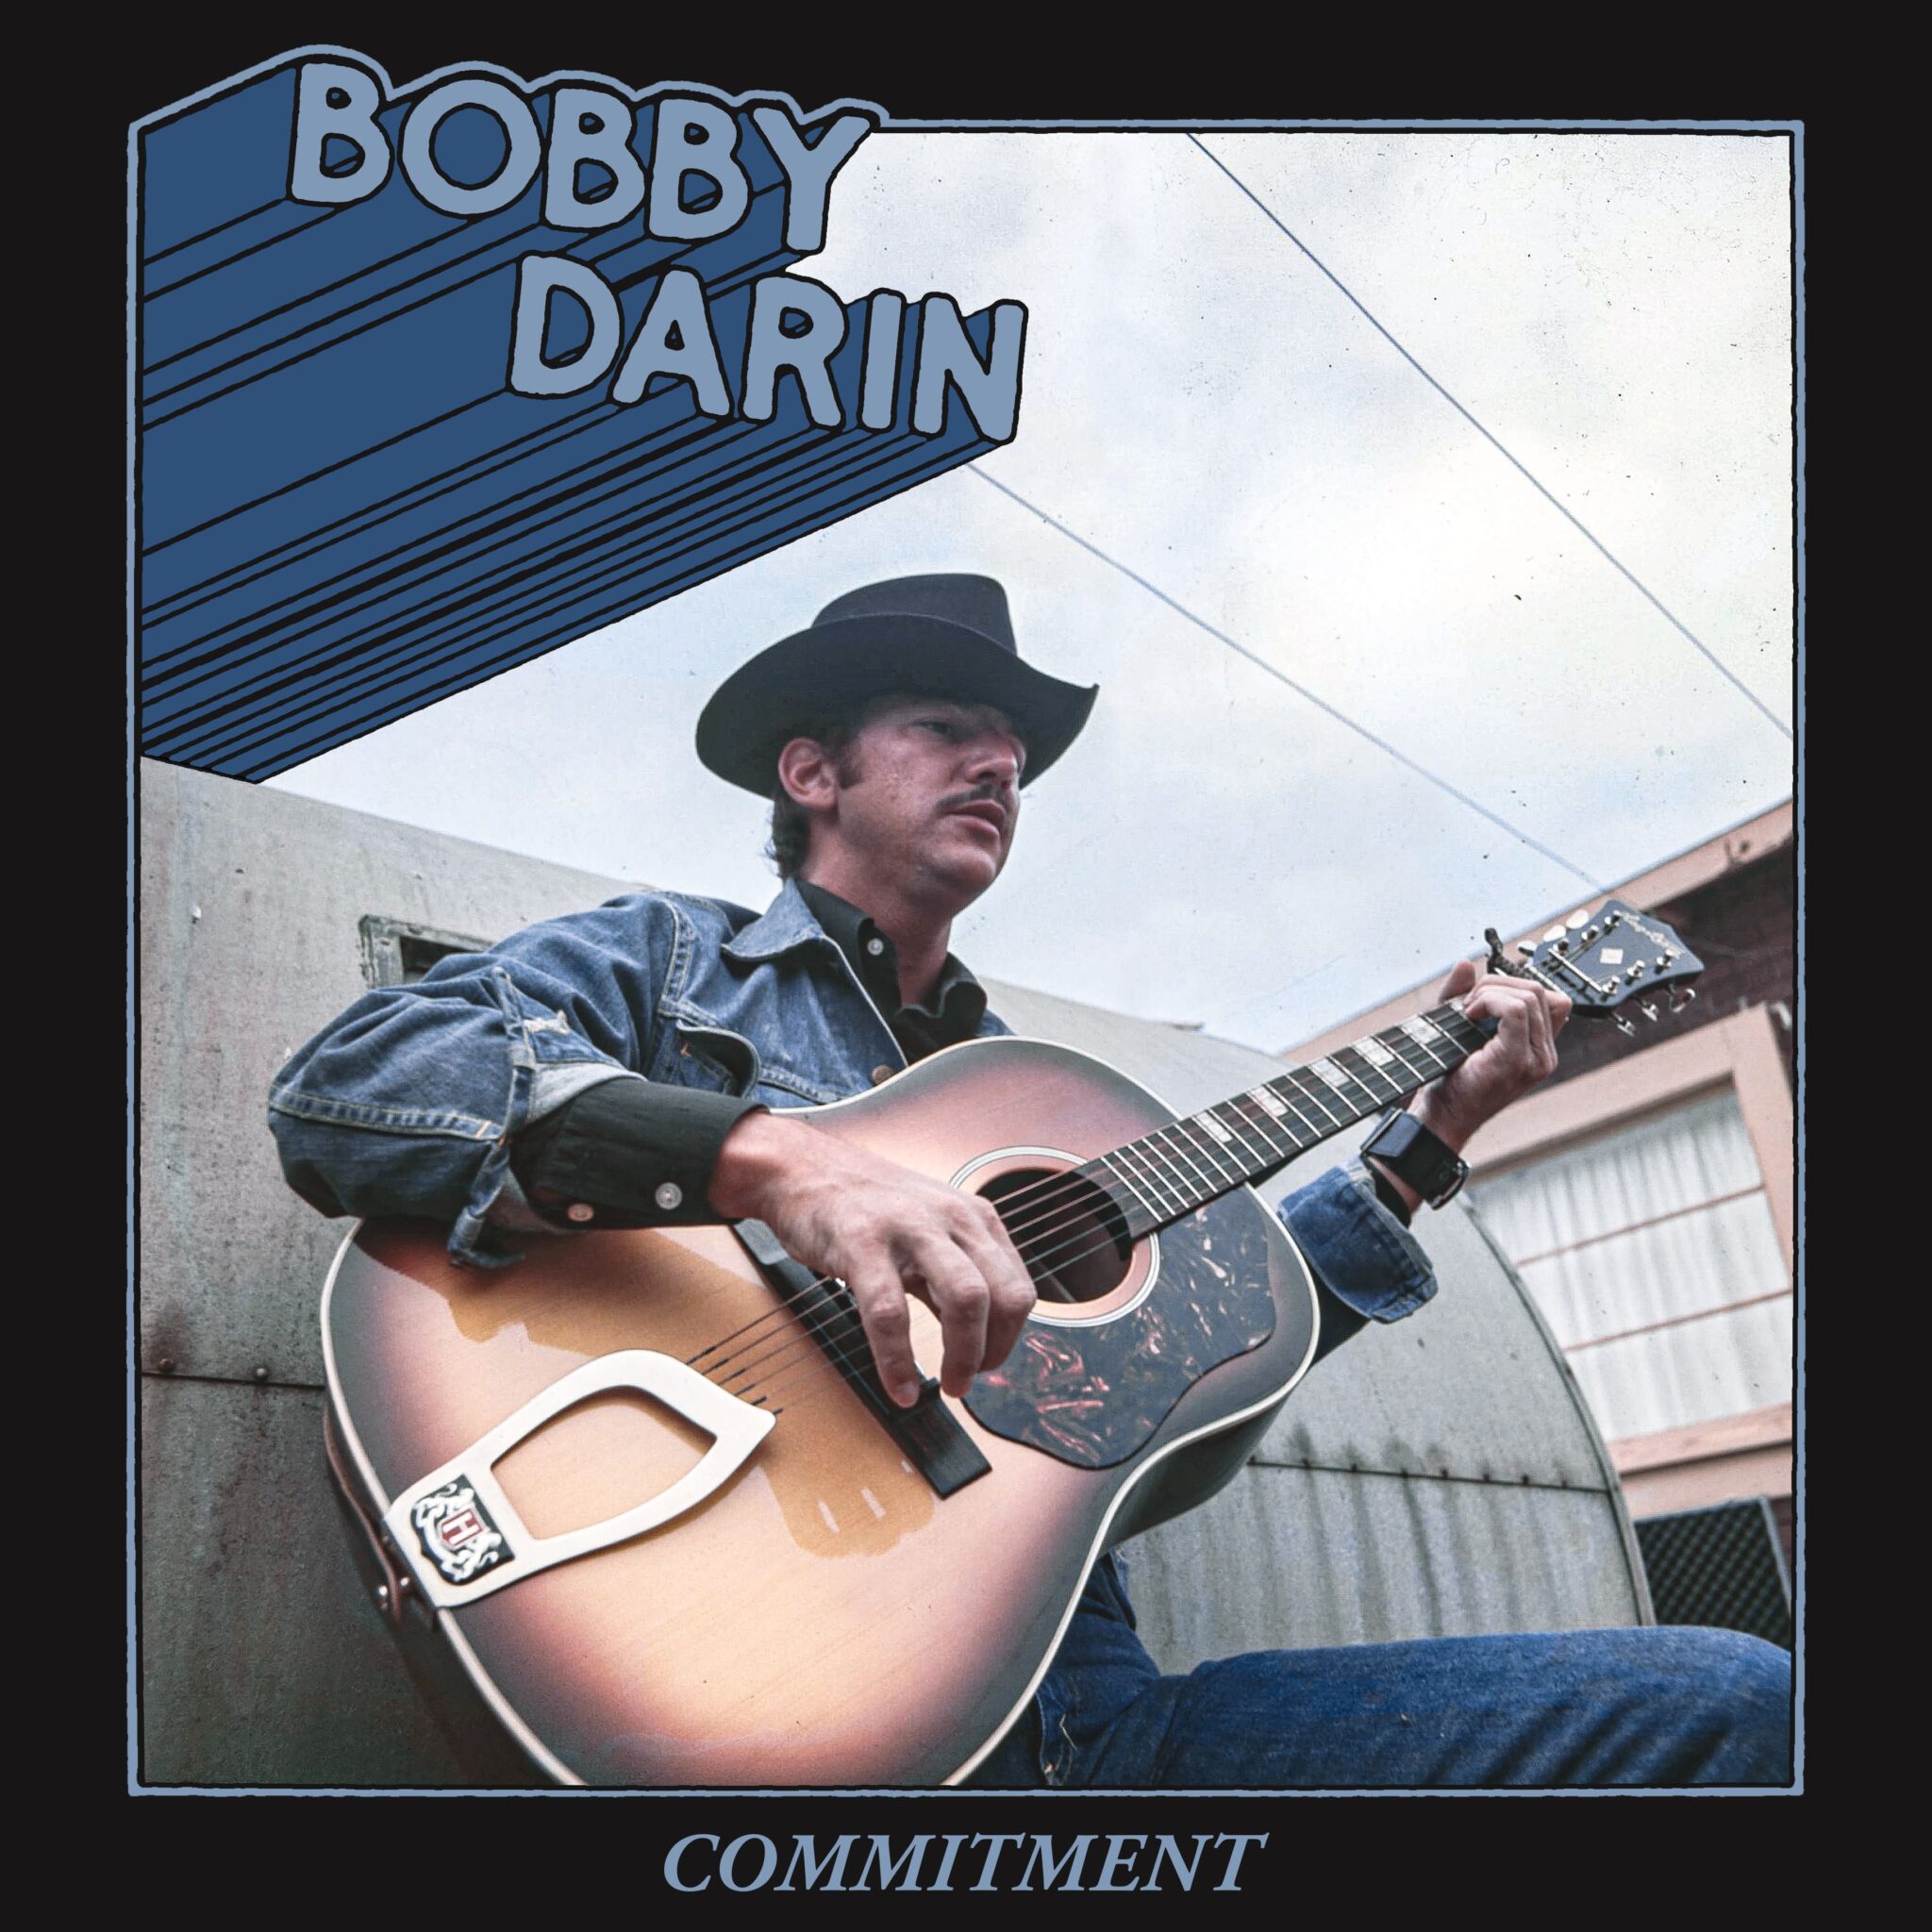 Bobby Darin in denim playing guitar